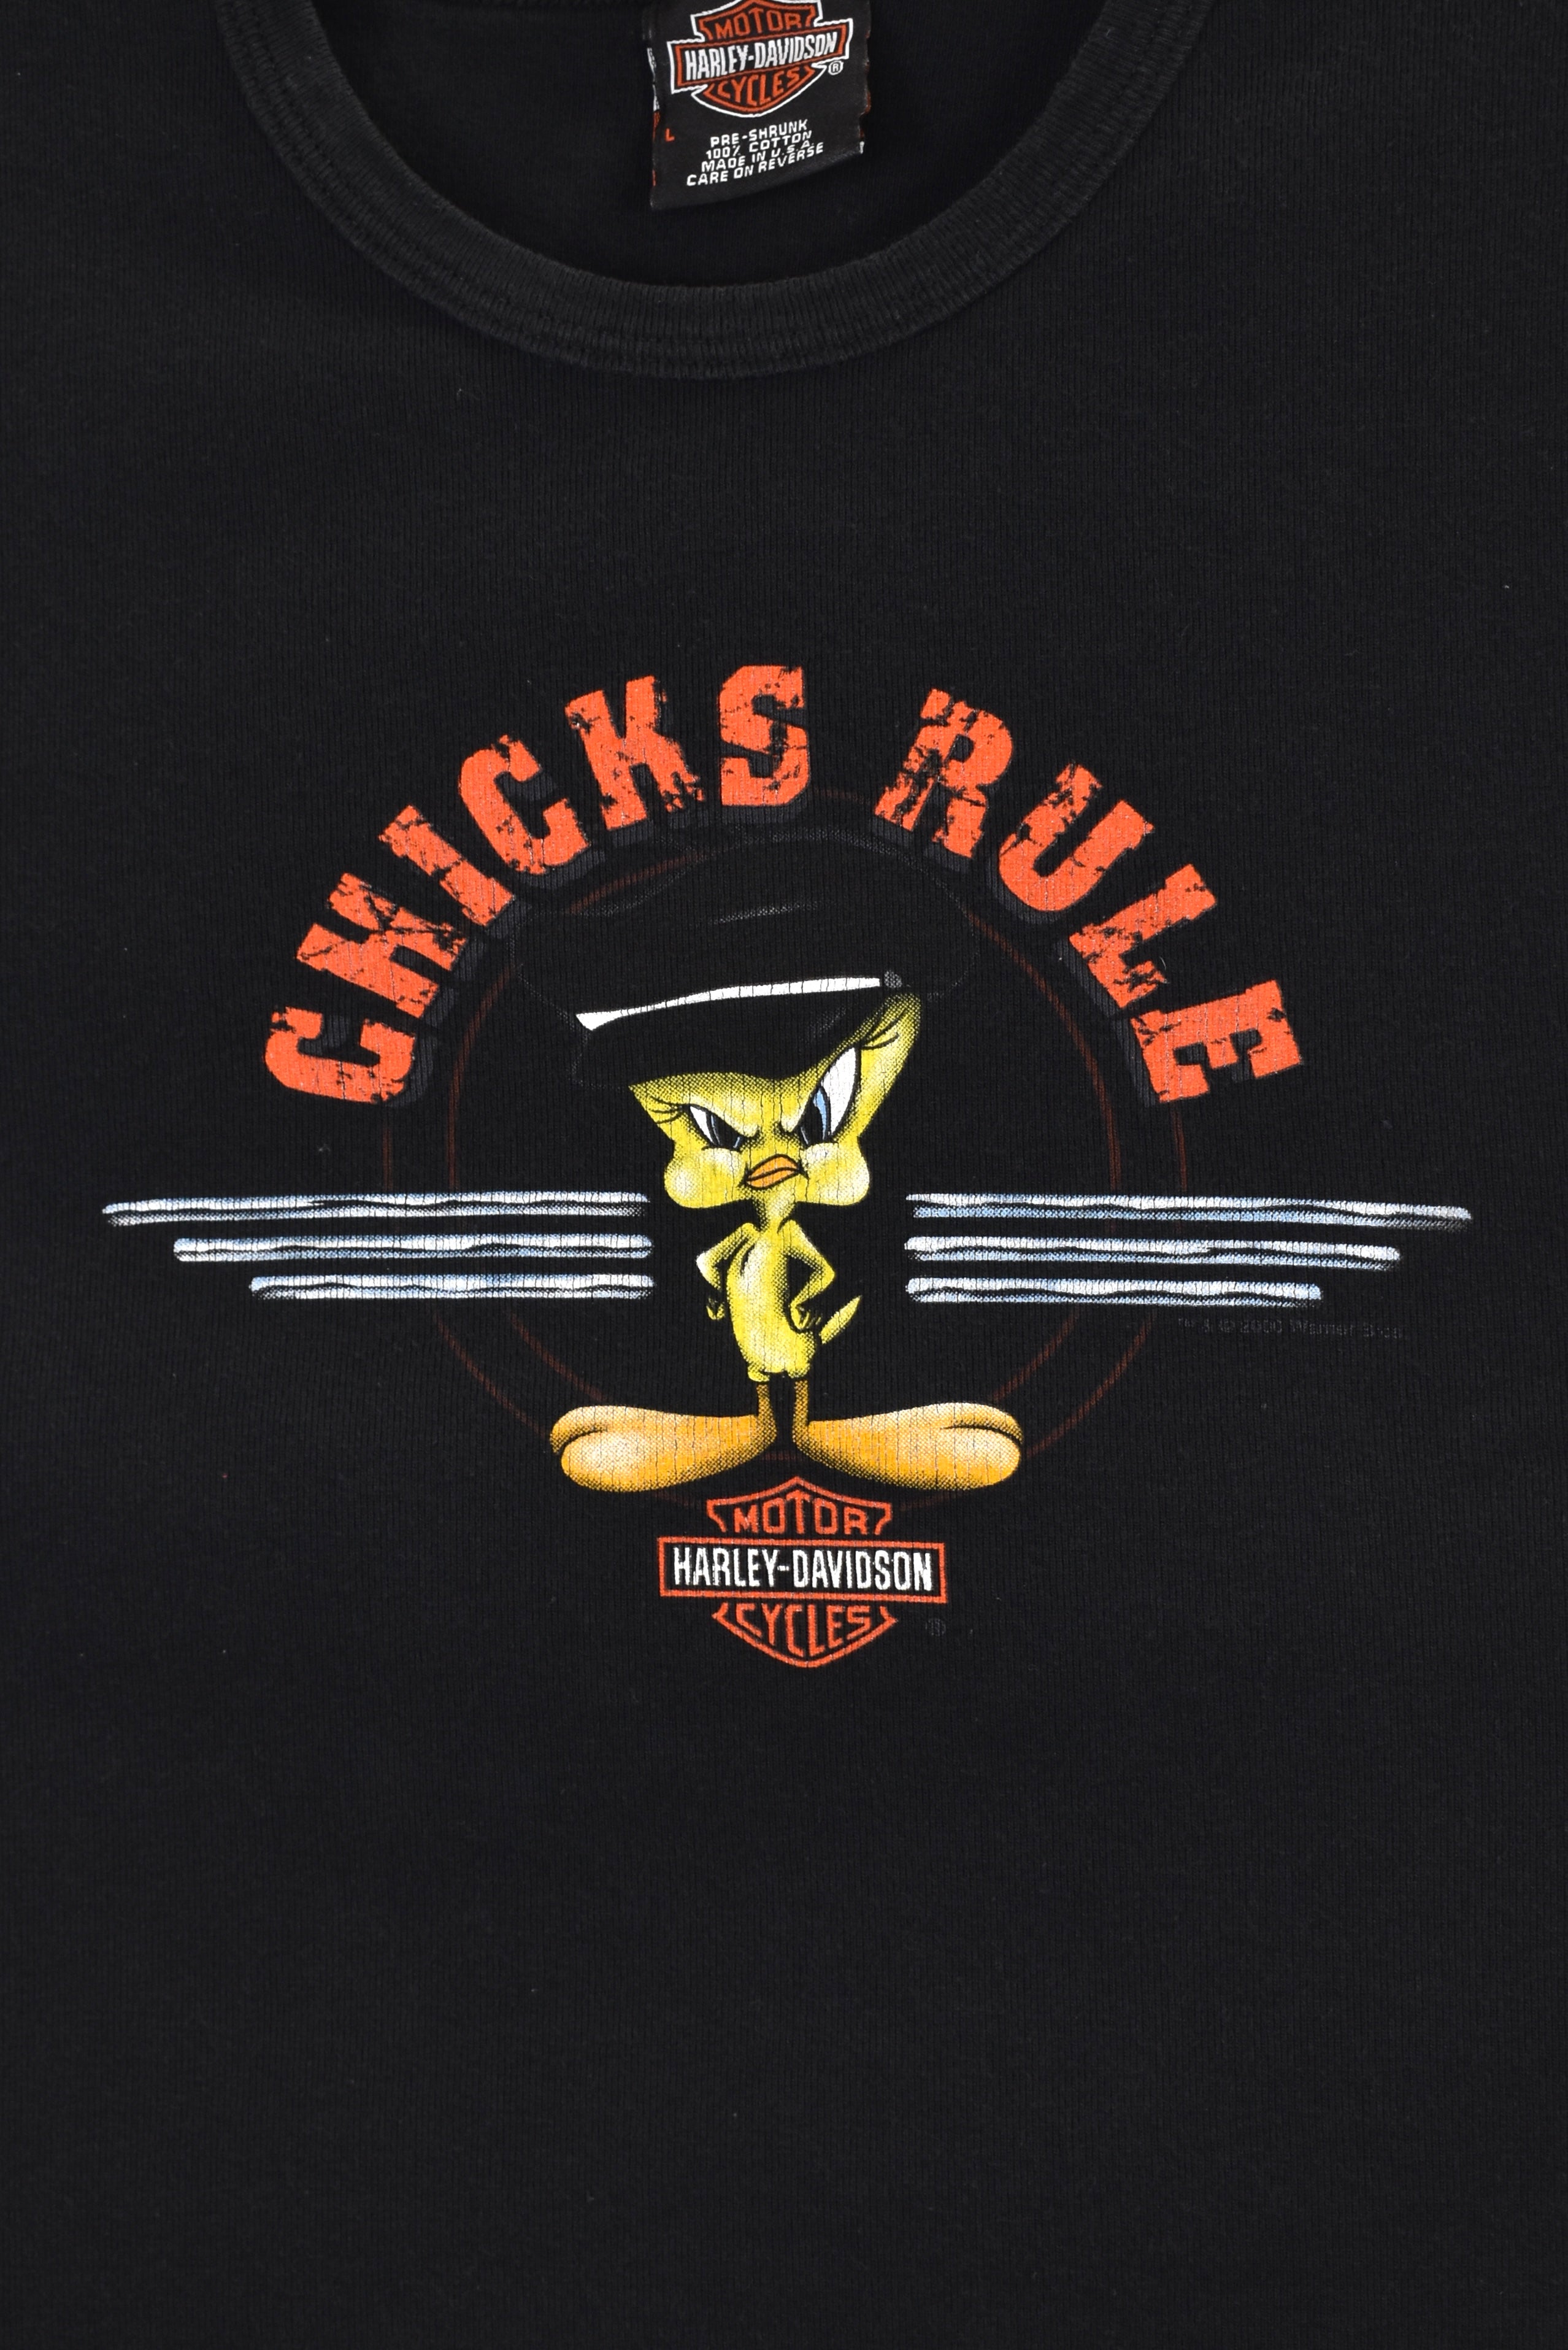 Women's vintage Harley Davidson shirt (M), black Y2K Tweety Bird graphic cropped tee